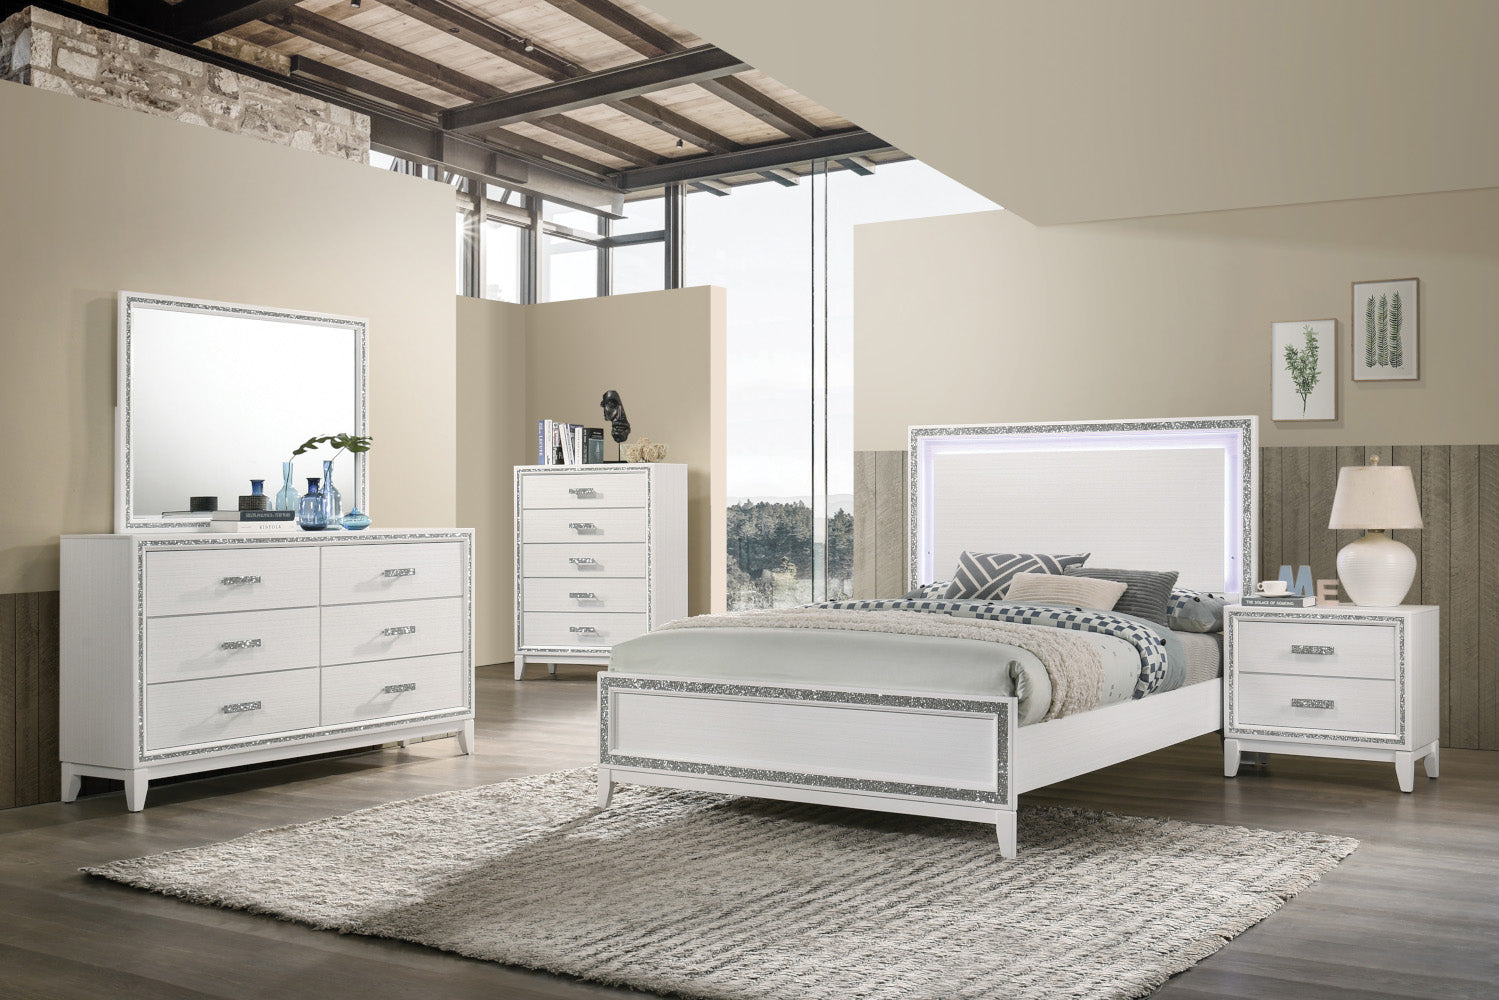 ACME Furniture Dressers - ACME Haiden Dresser, White Finish